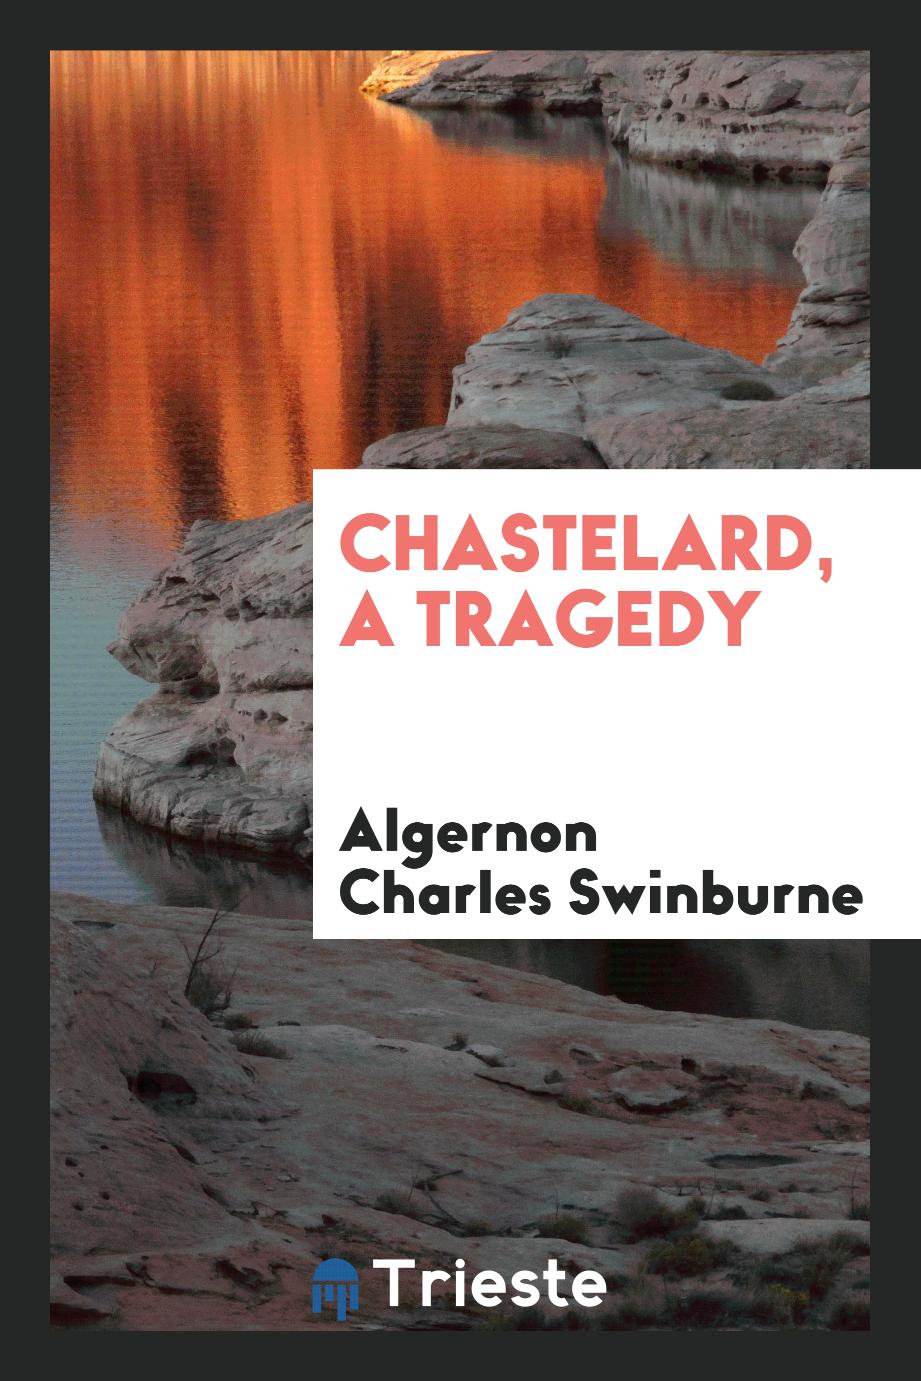 Algernon Charles Swinburne - Chastelard, a tragedy